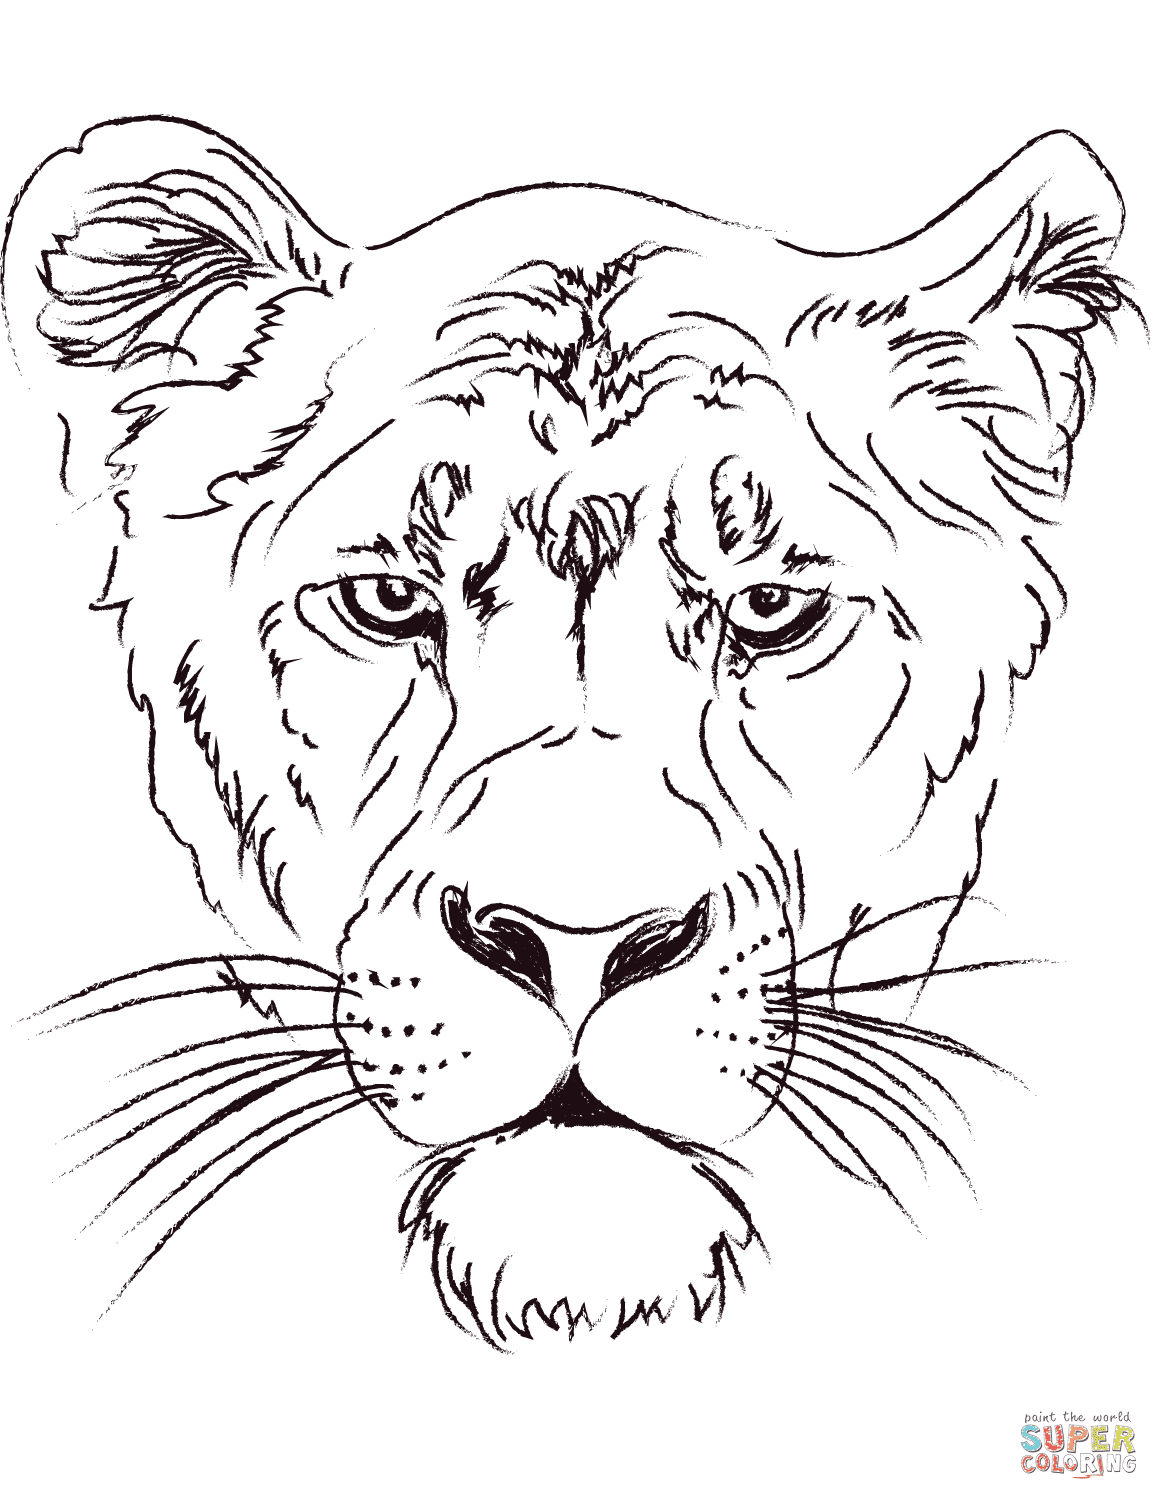 Geometric lion head coloring page. Lions Coloring Pages Free Coloring Pages